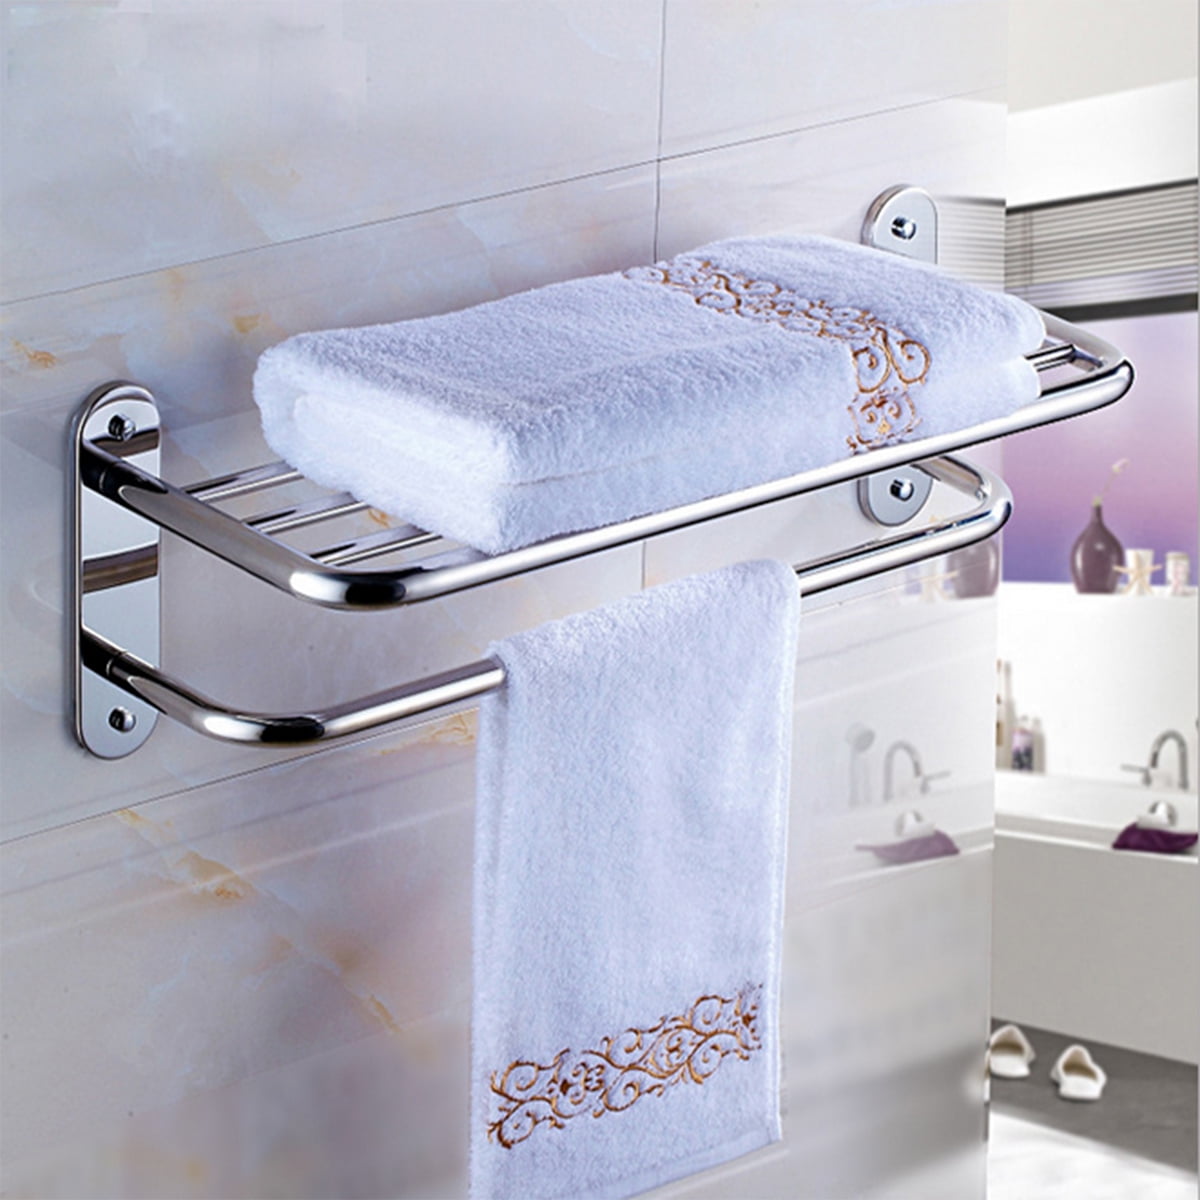 HALLOLURE Home Hotel Towel Shelf, Chrome Stainless Steel Towel Rack Wall Mount Bathroom Shelf Bar Rail Hotel Style